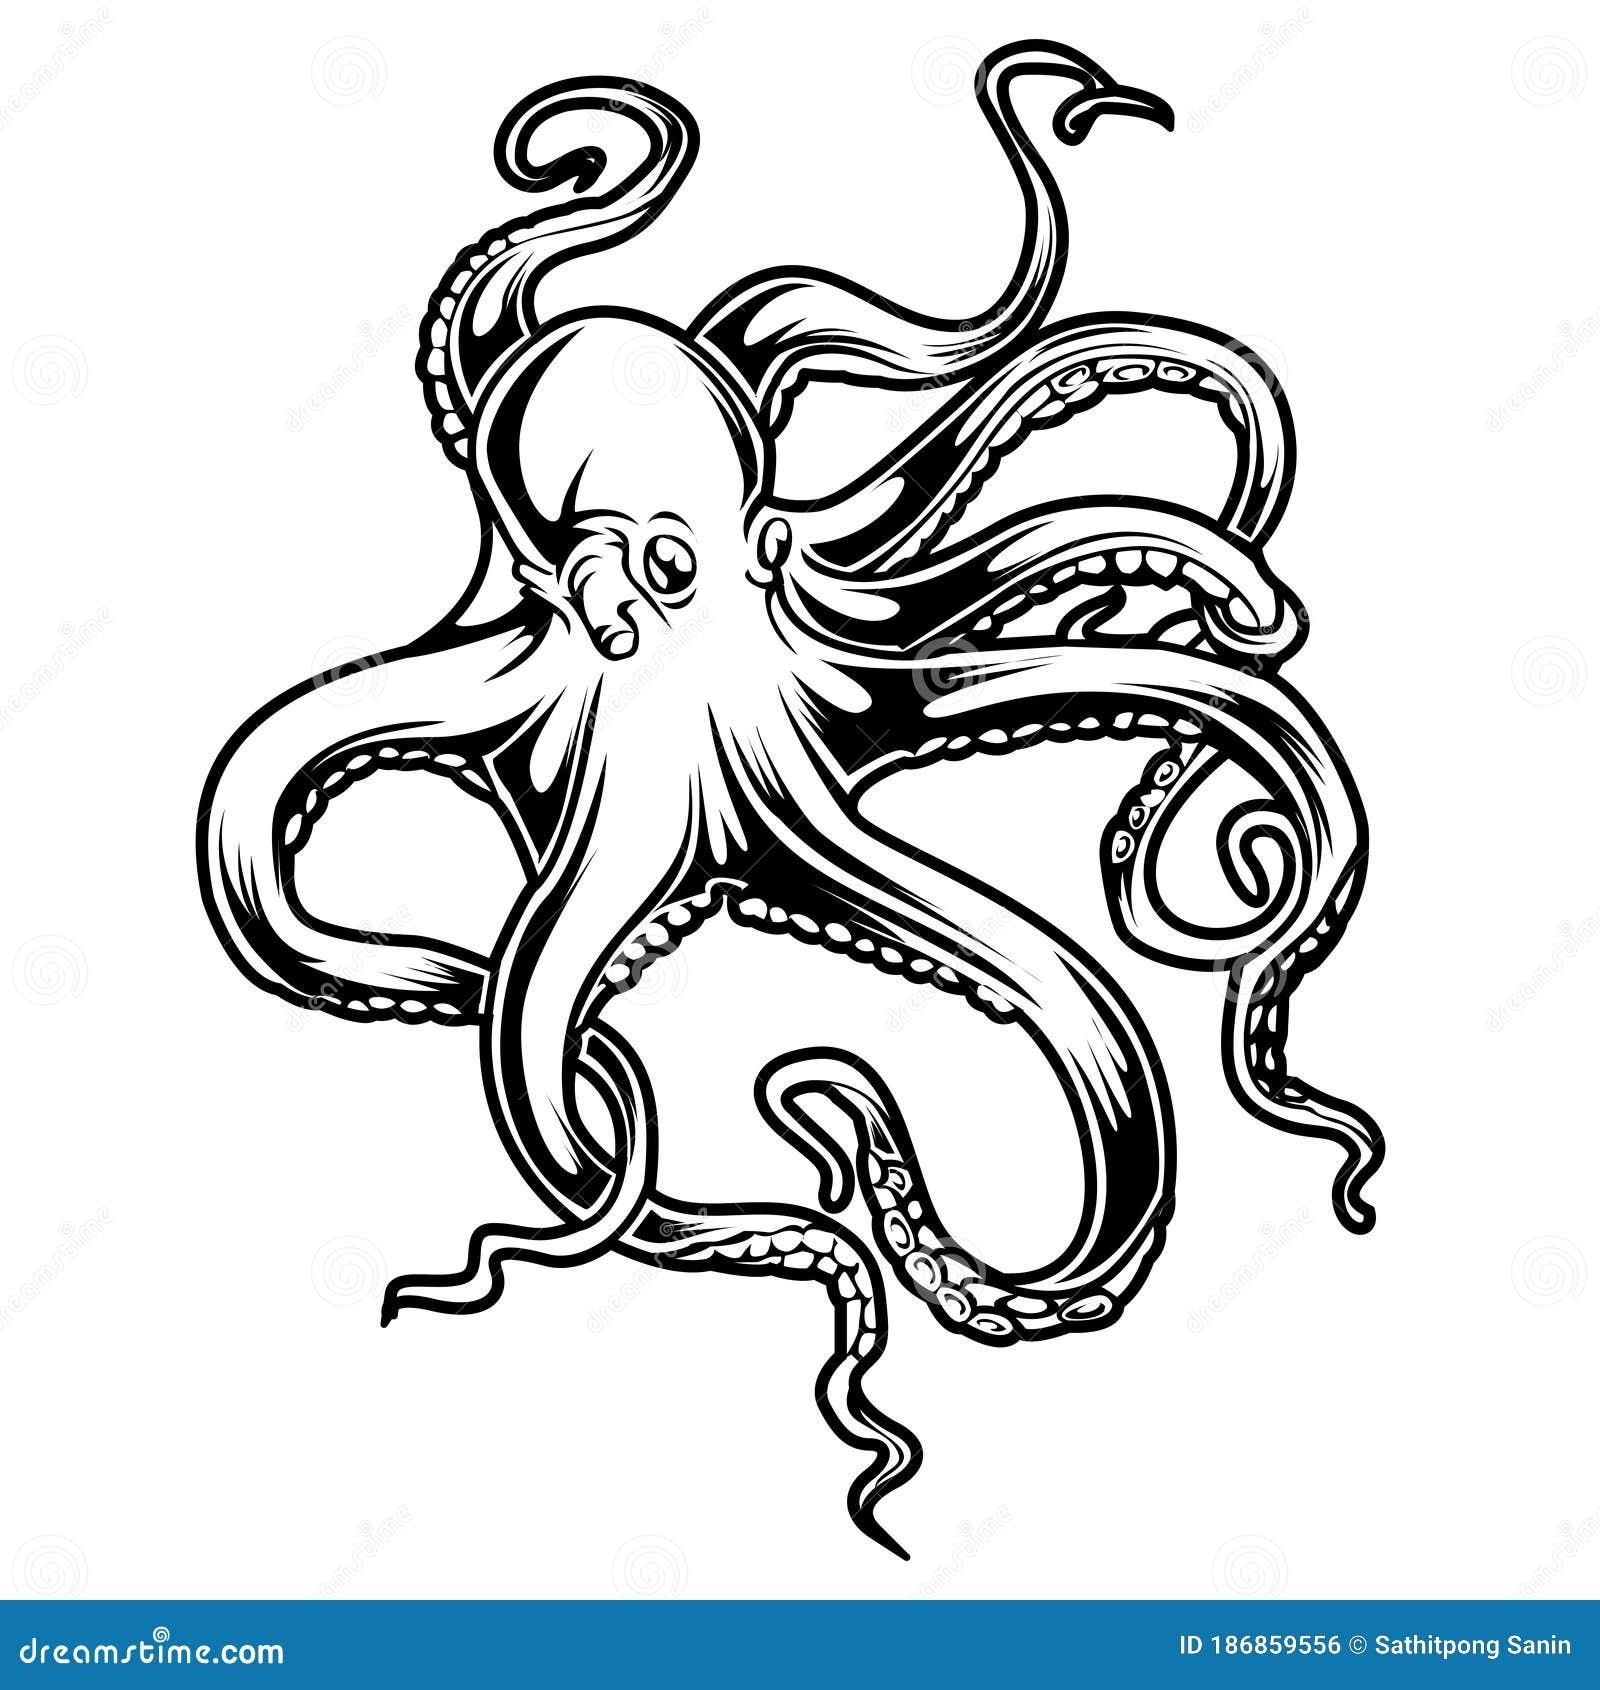 Octopus Drawing black stock vector. Illustration of sailor - 186859556